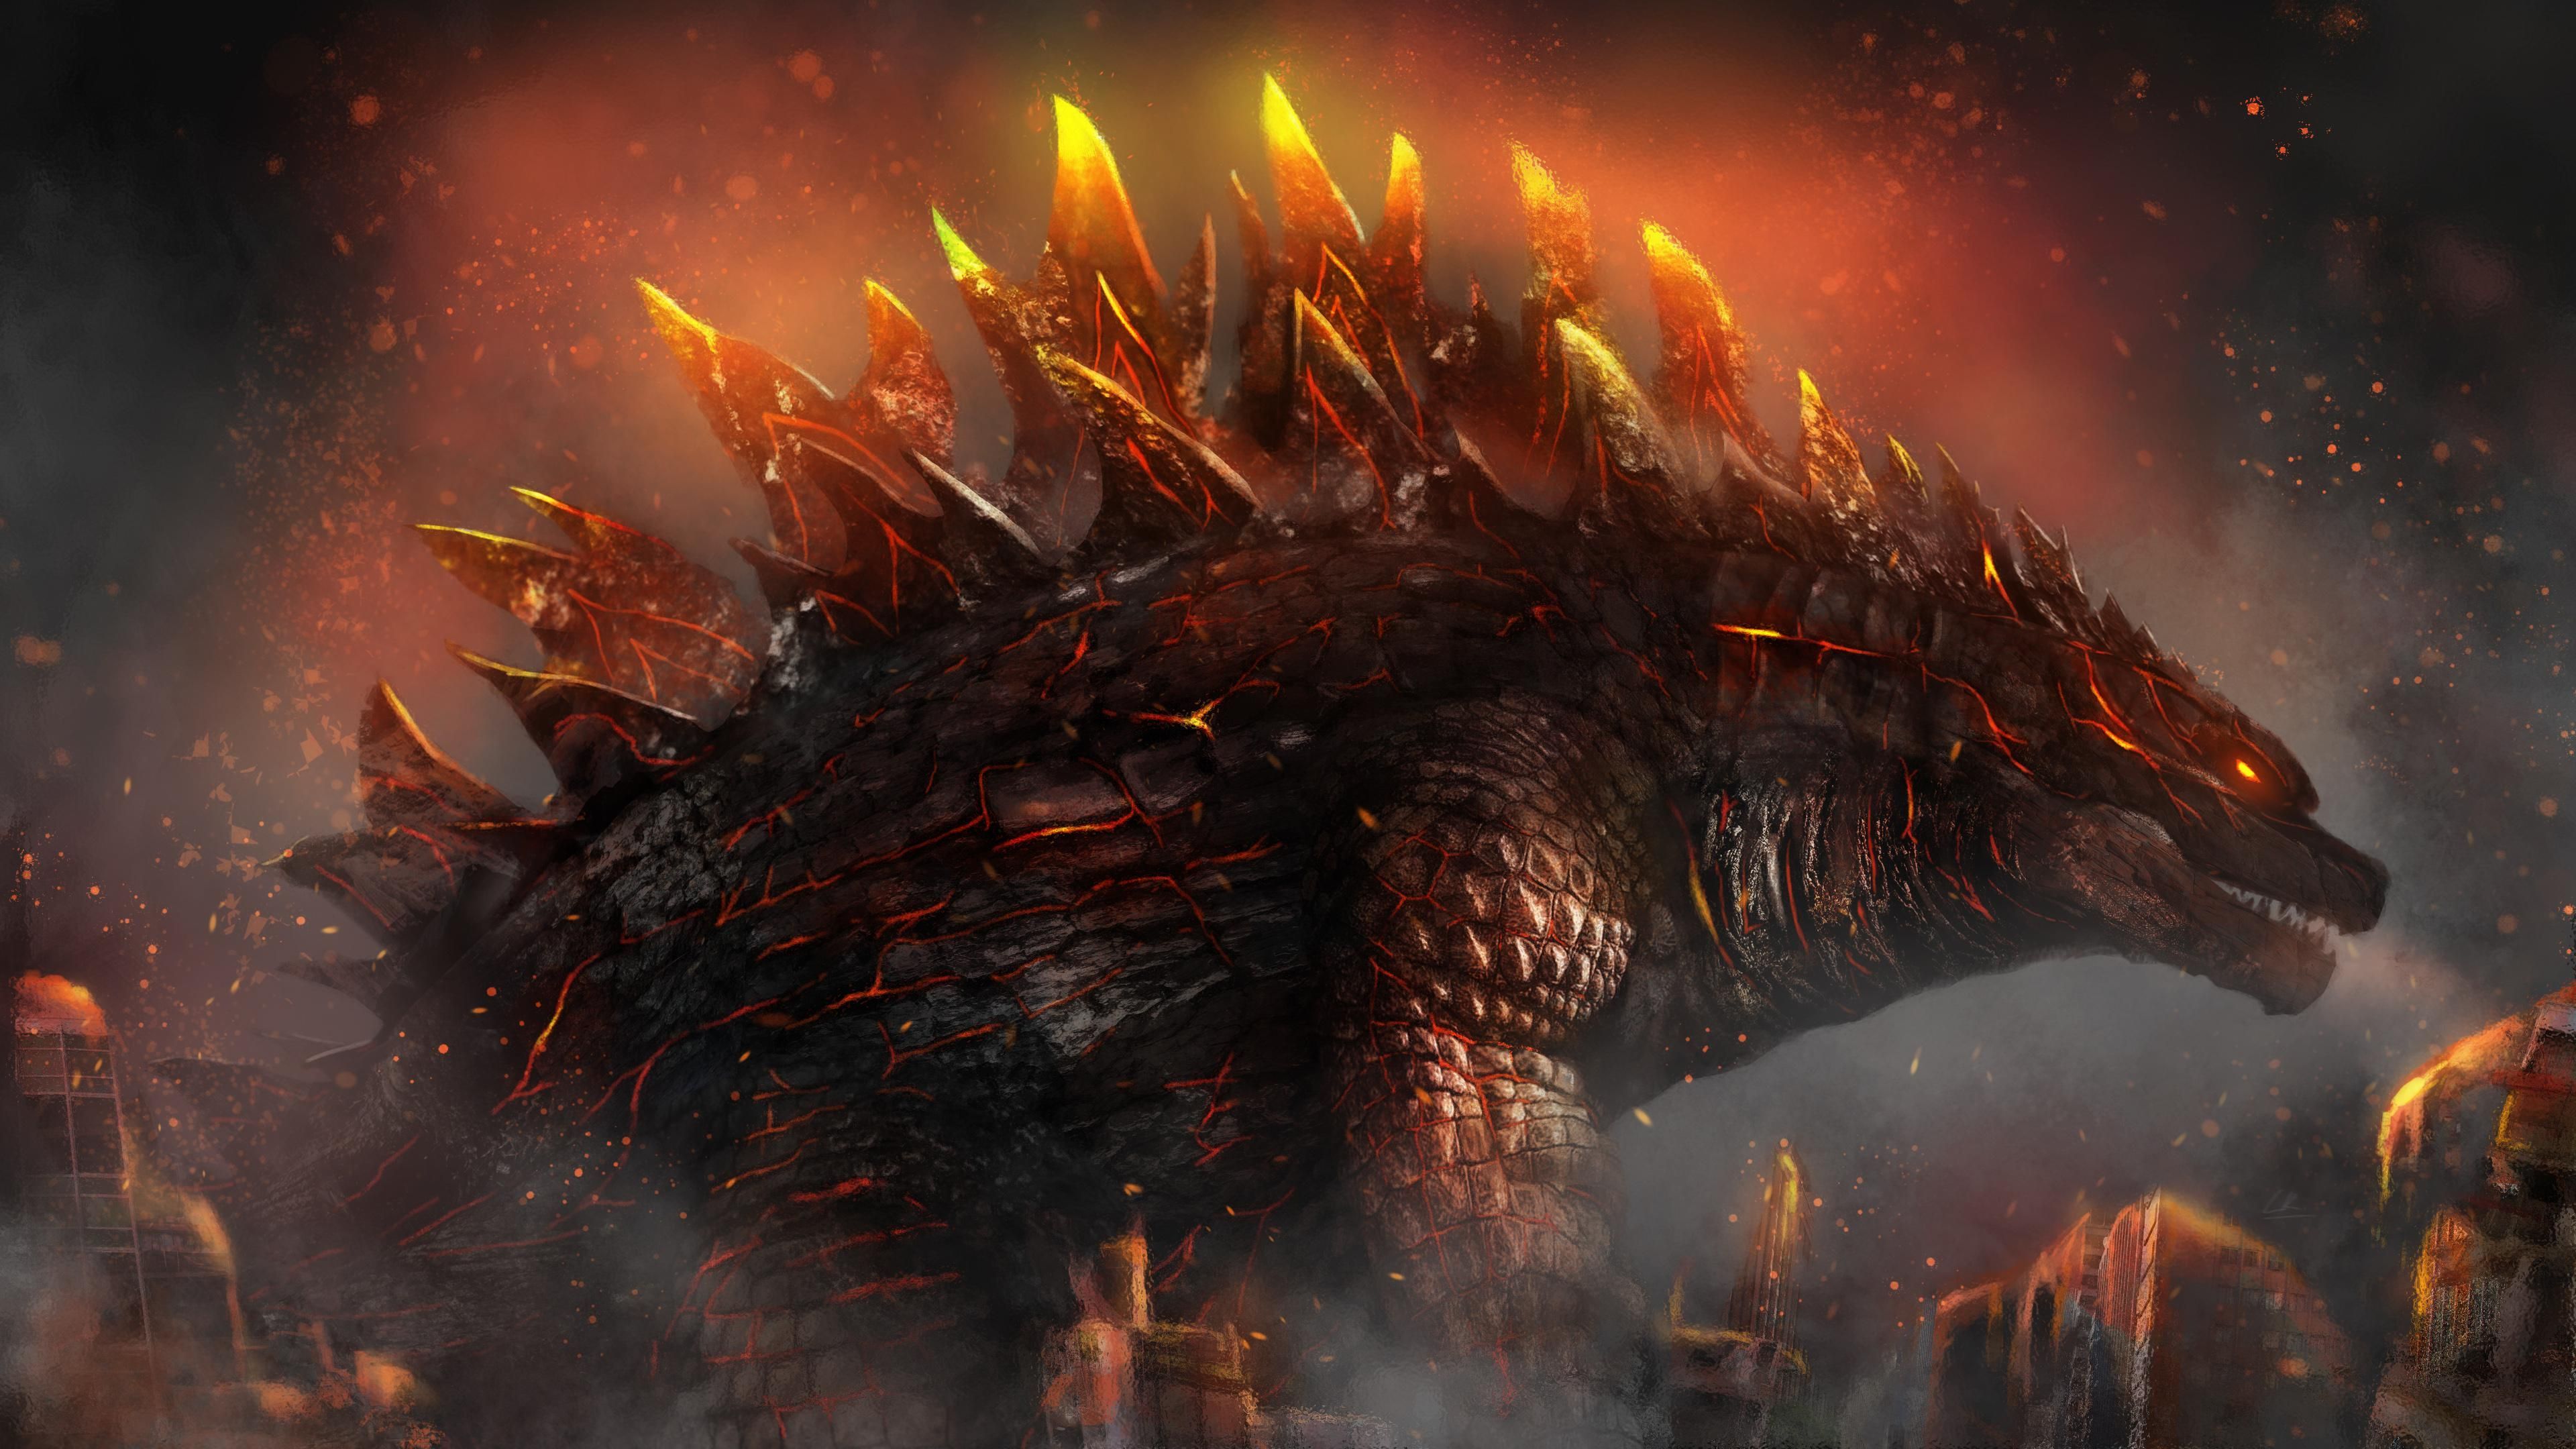 Thermonuclear / Fire Godzilla. Godzilla, Kaiju monsters, All godzilla monsters